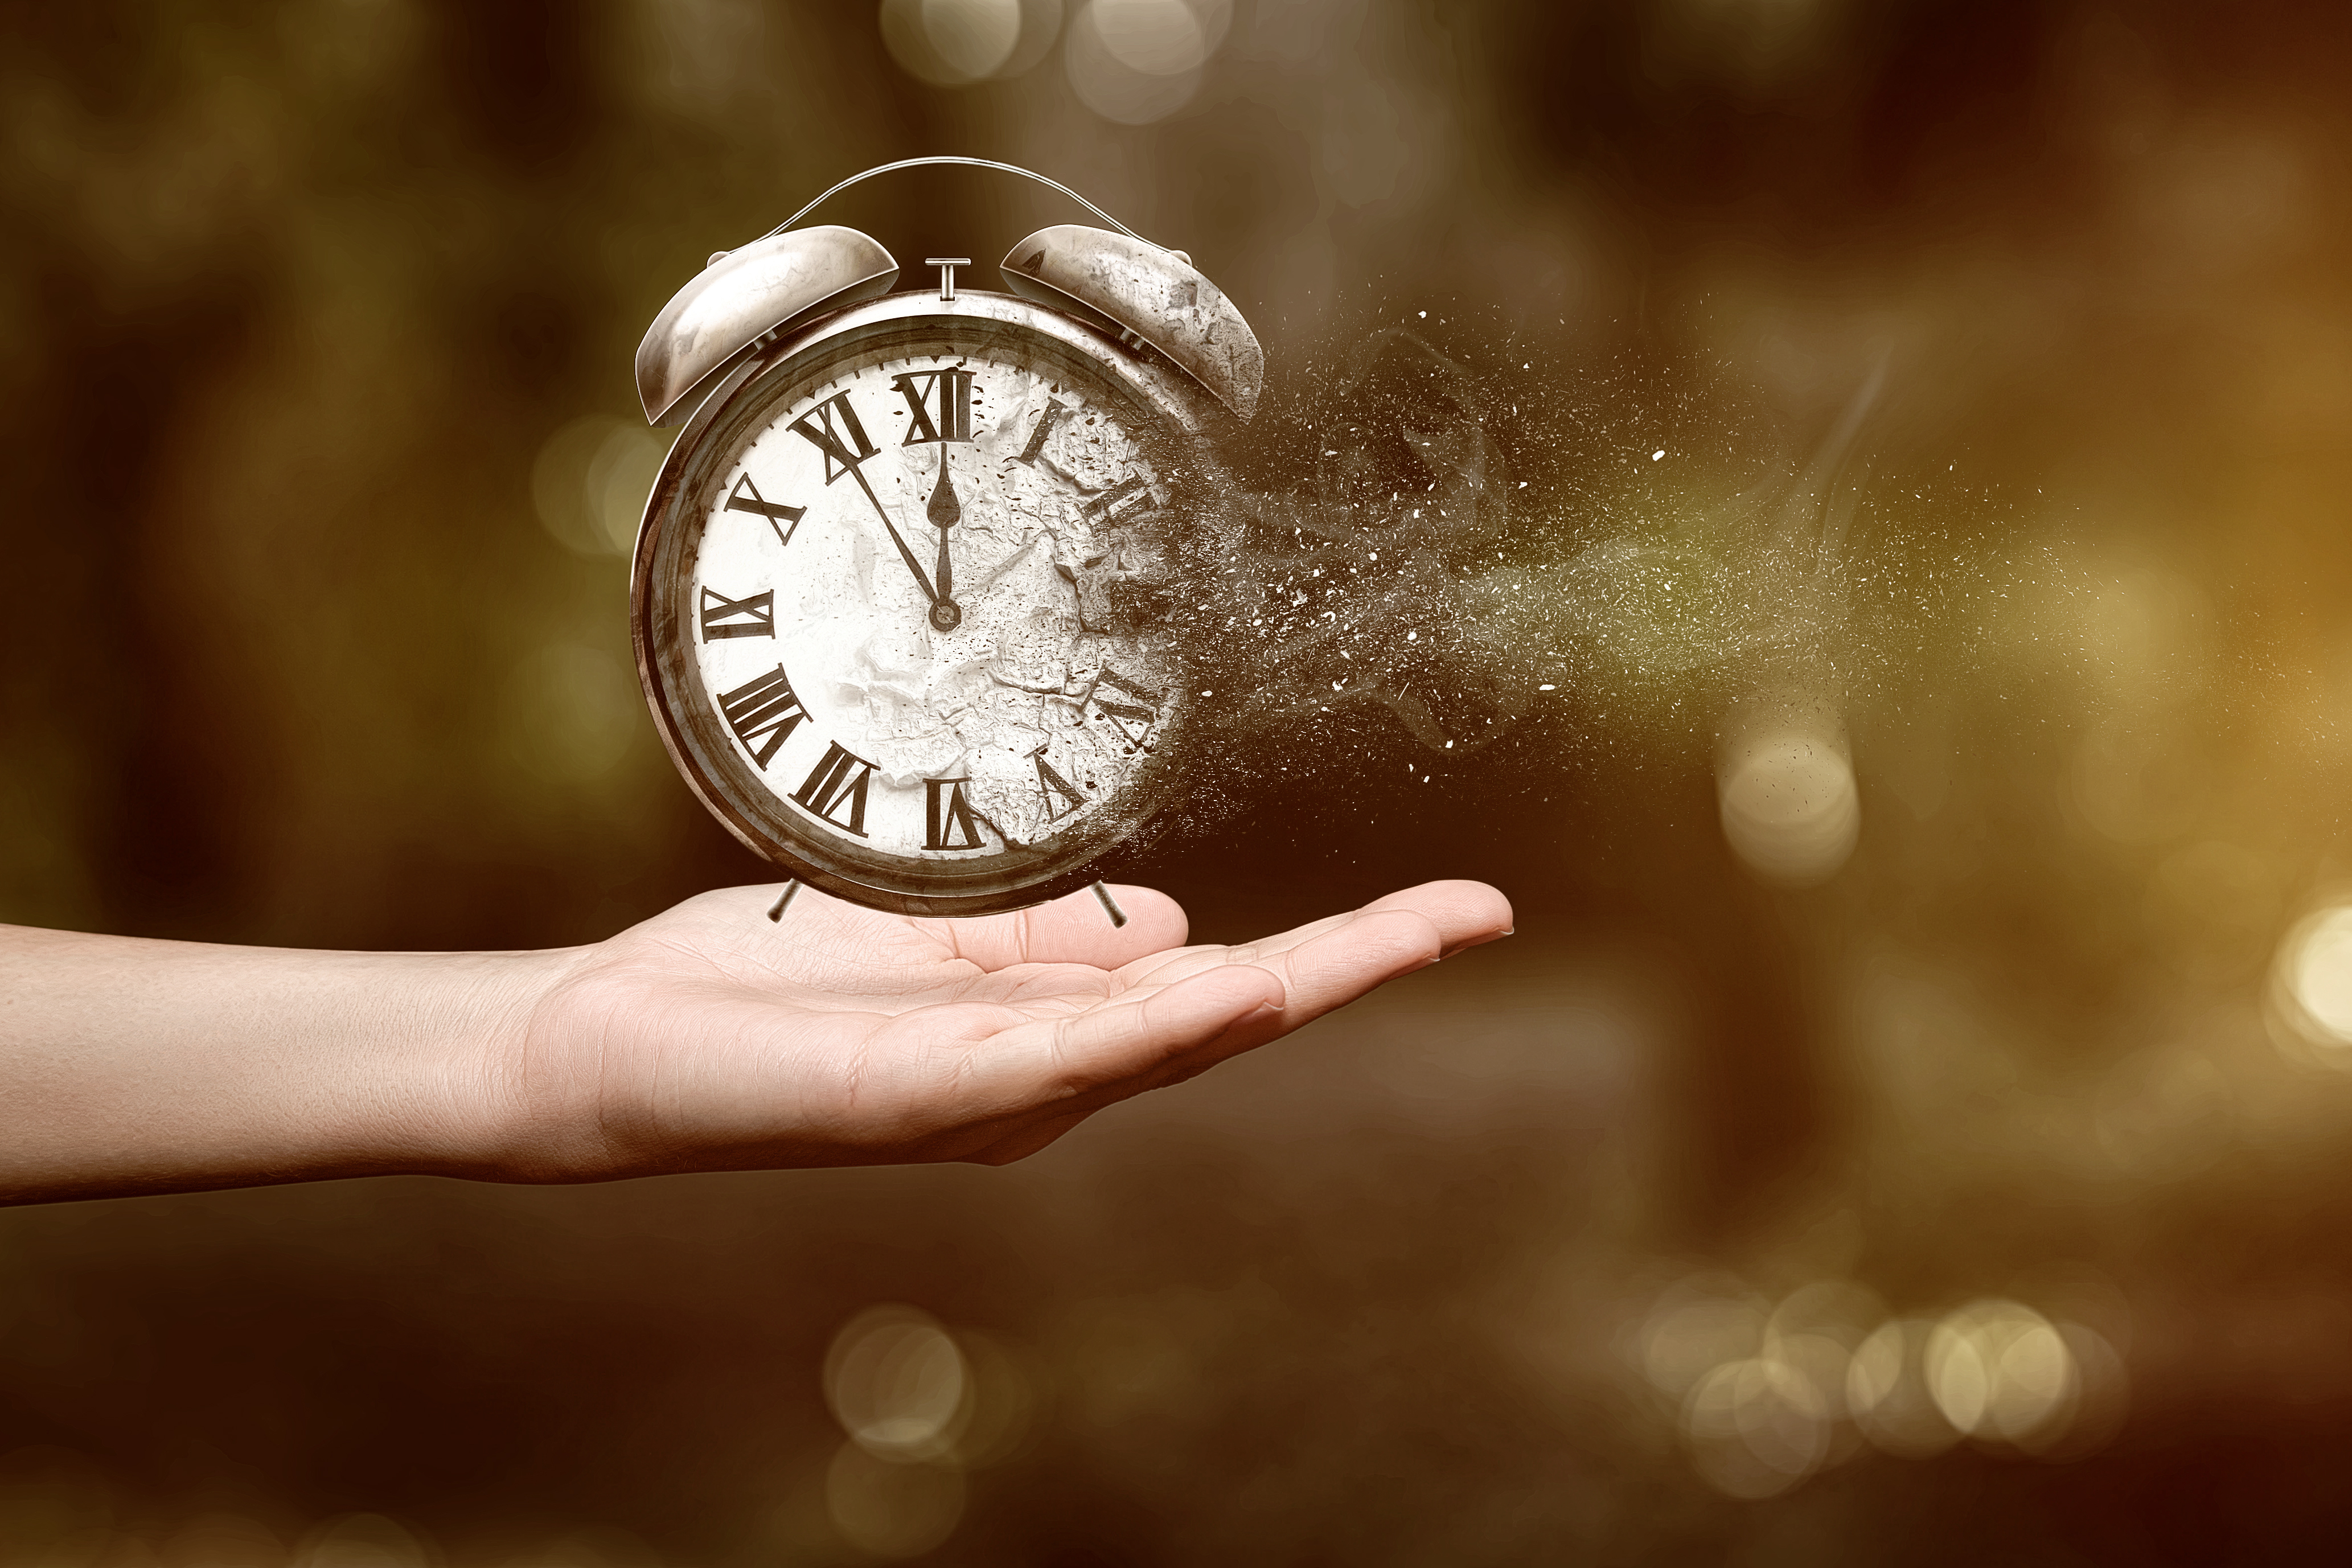 Une main tenant une horloge en train de disparaître | Source : Shutterstock